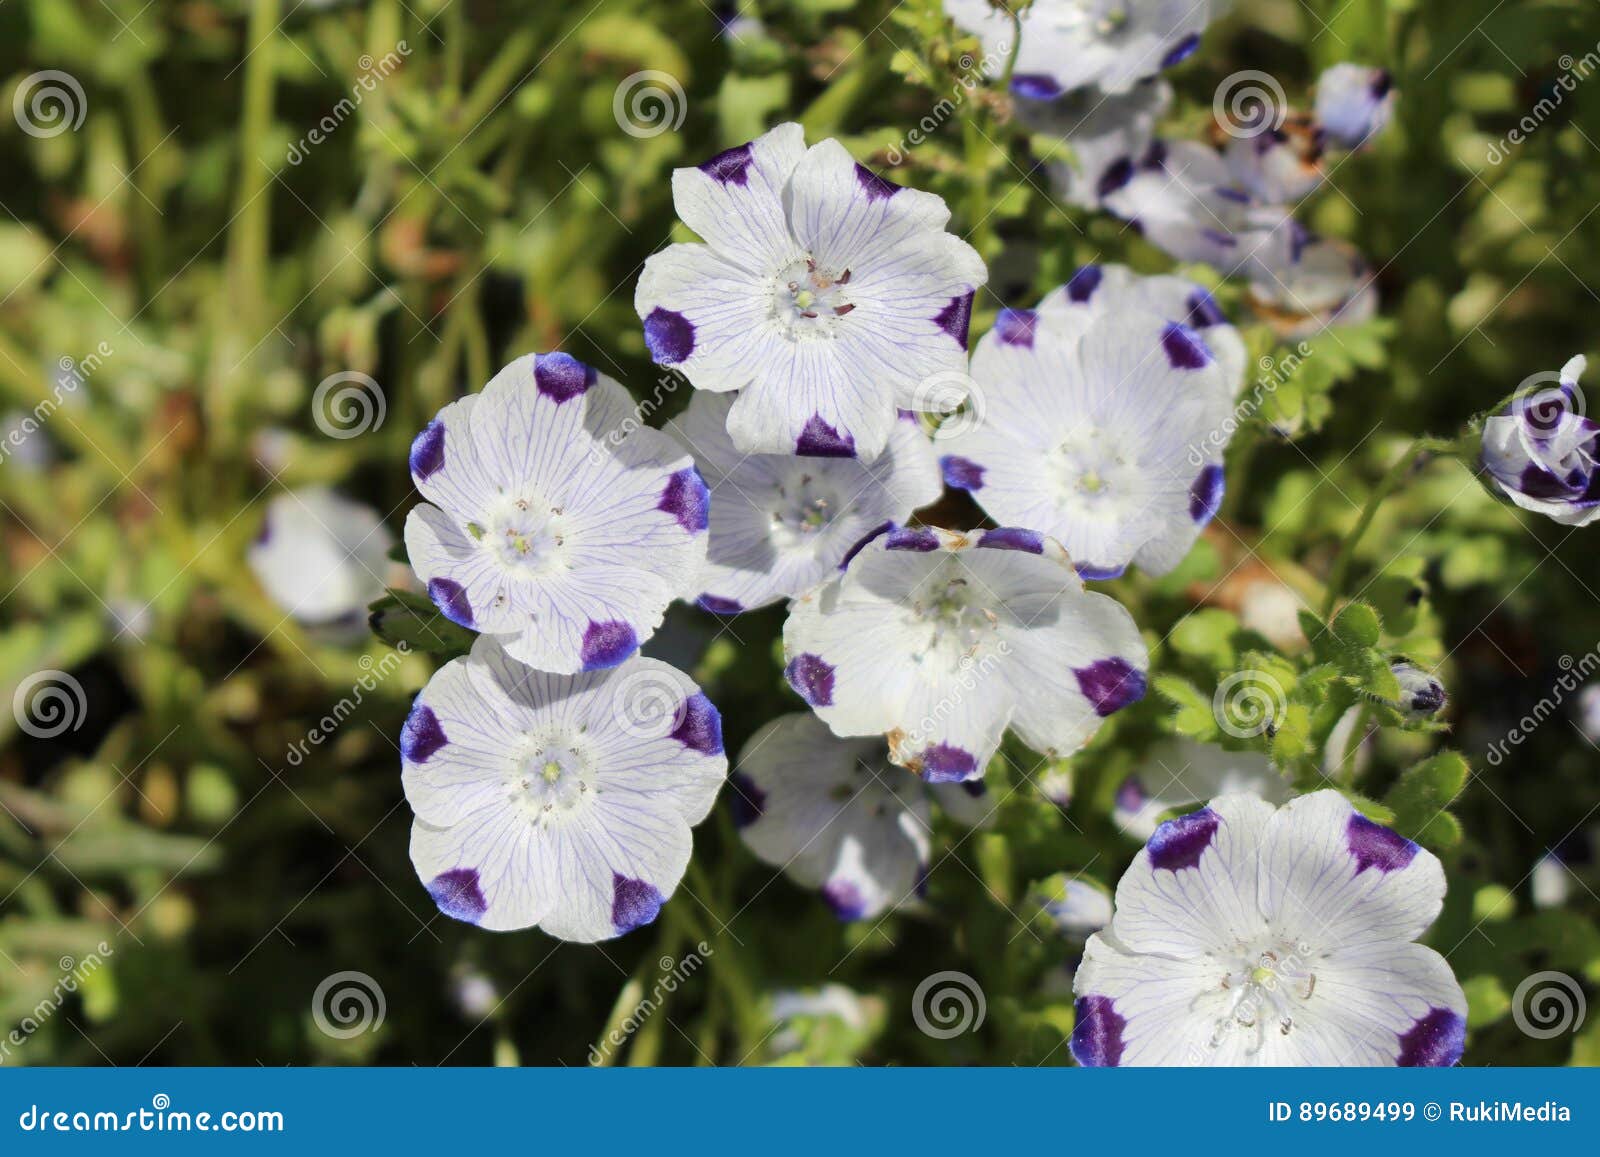 Five Spot Flower Nemophila Maculata Stock Image Image Of Gepfleckte Bloom 6499